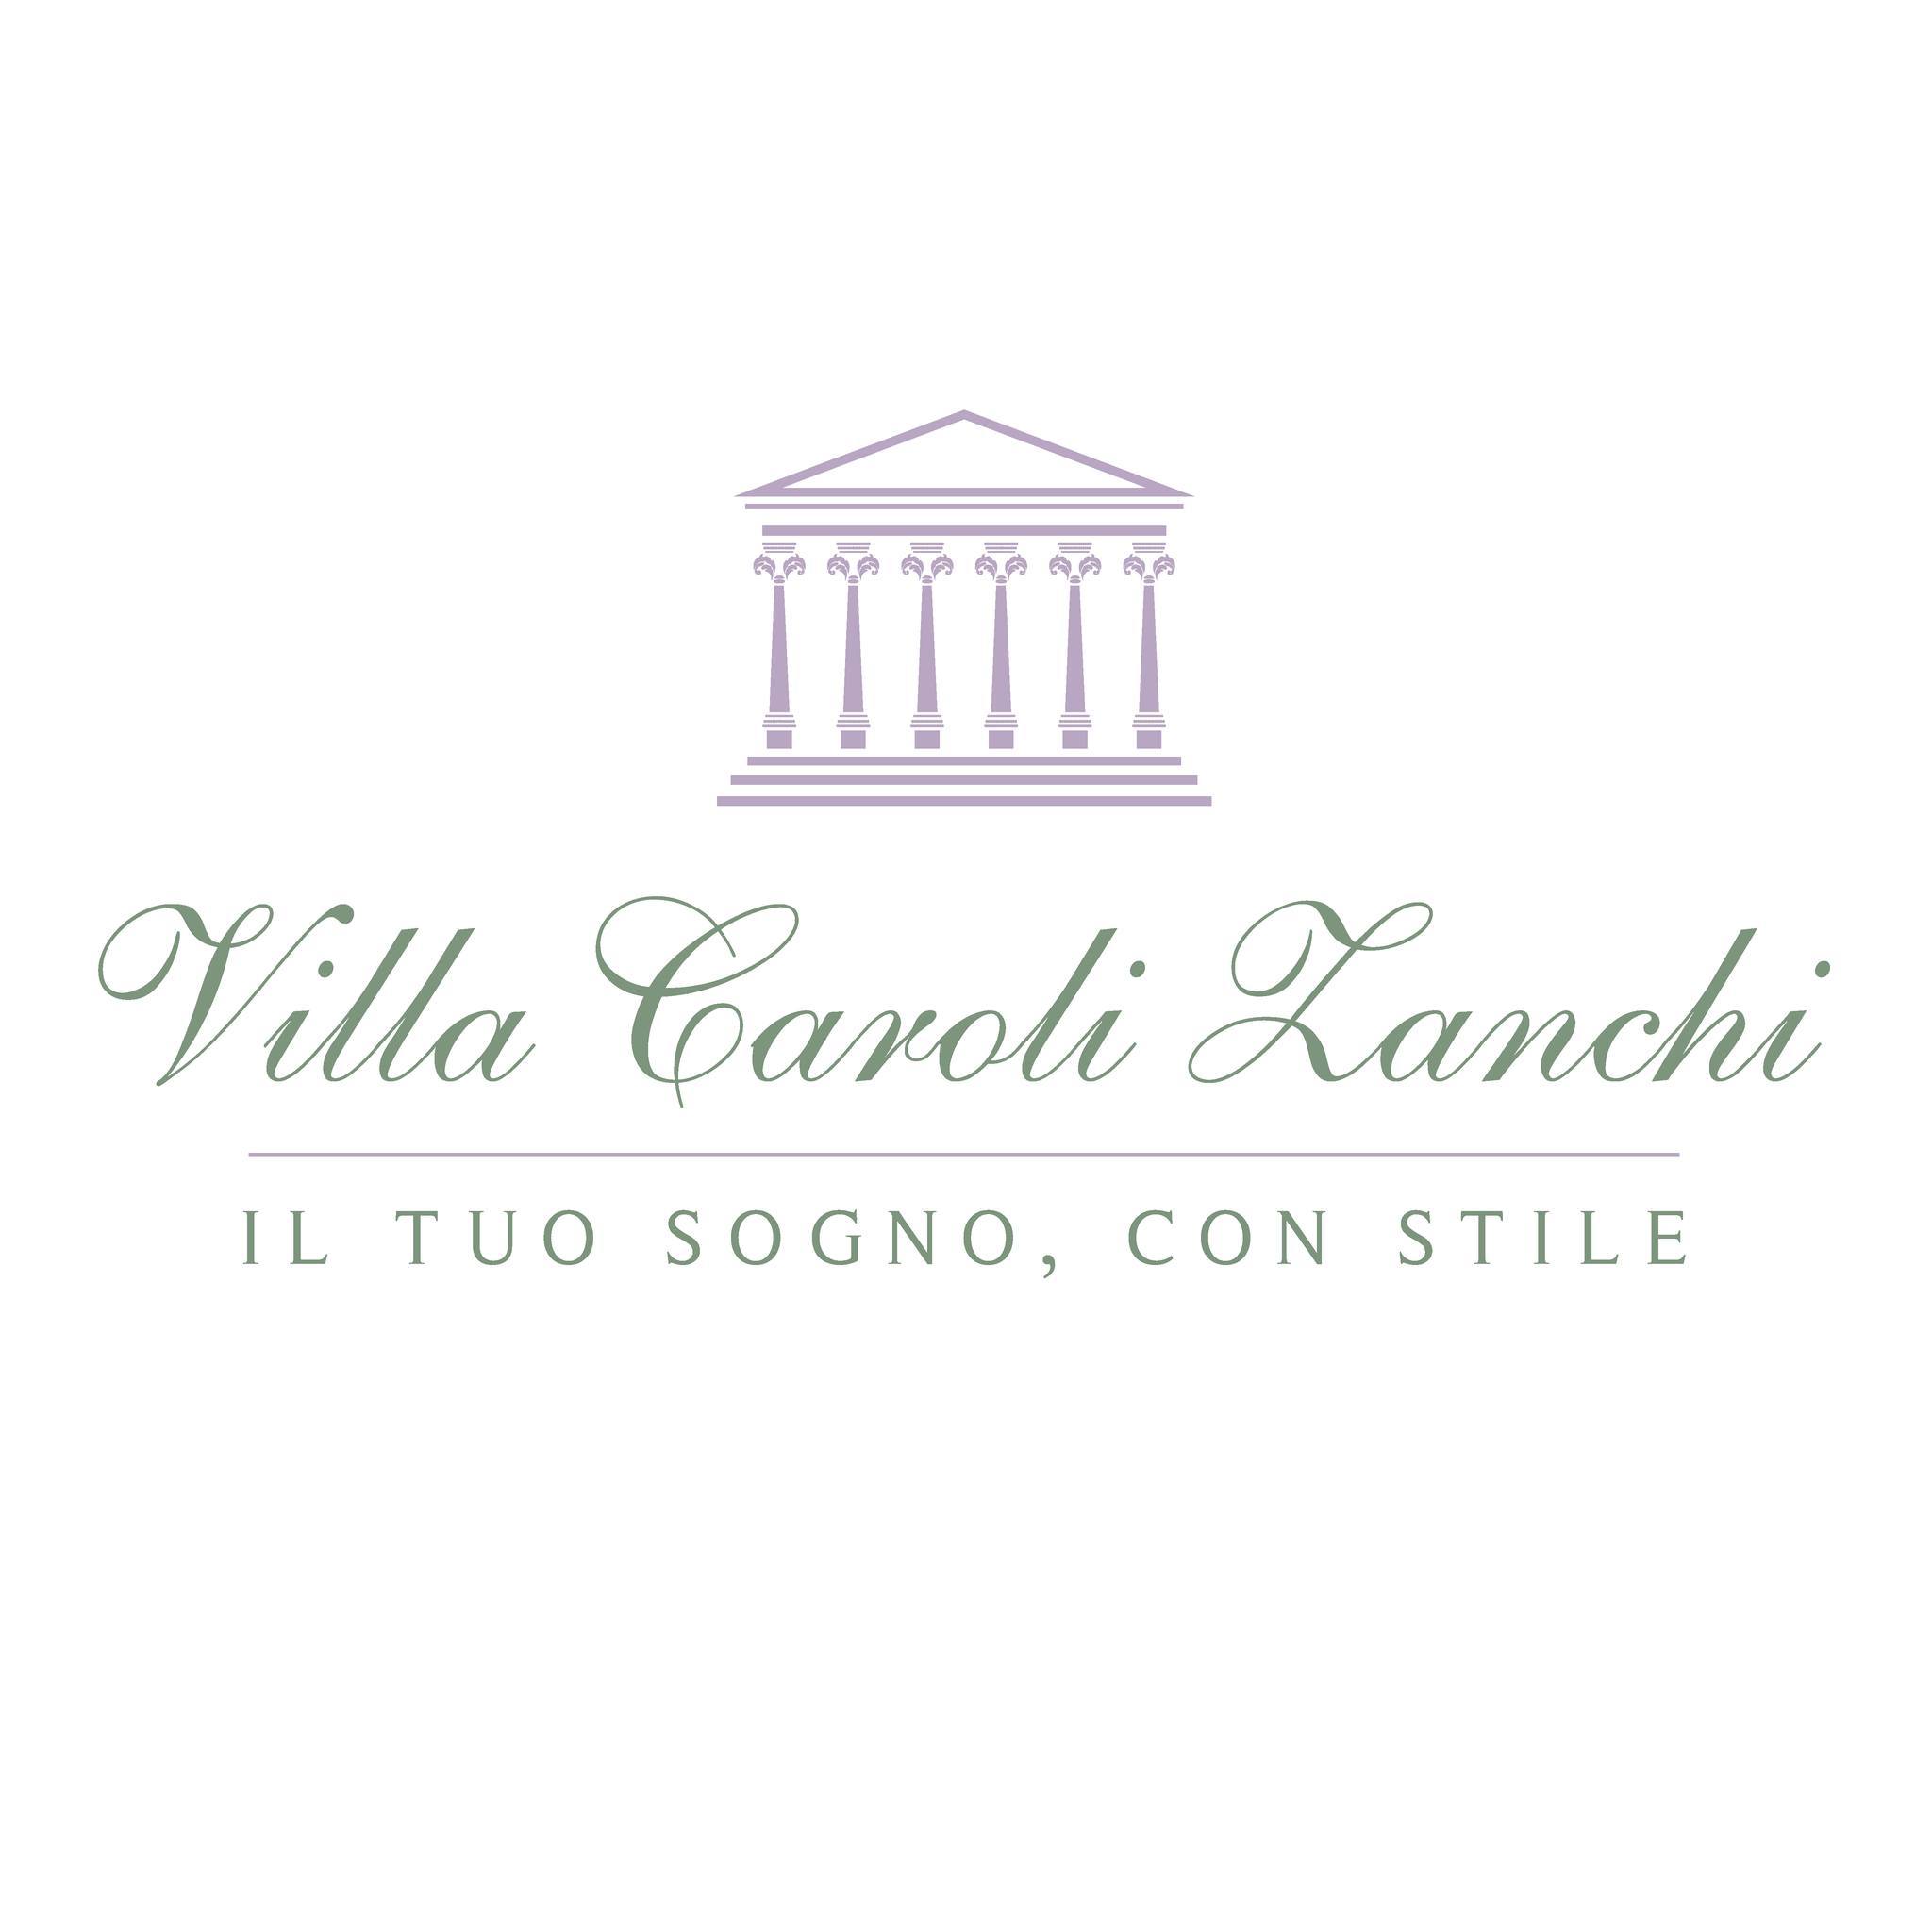 Le feste di Mirtillo - Logo Villa Zanchi